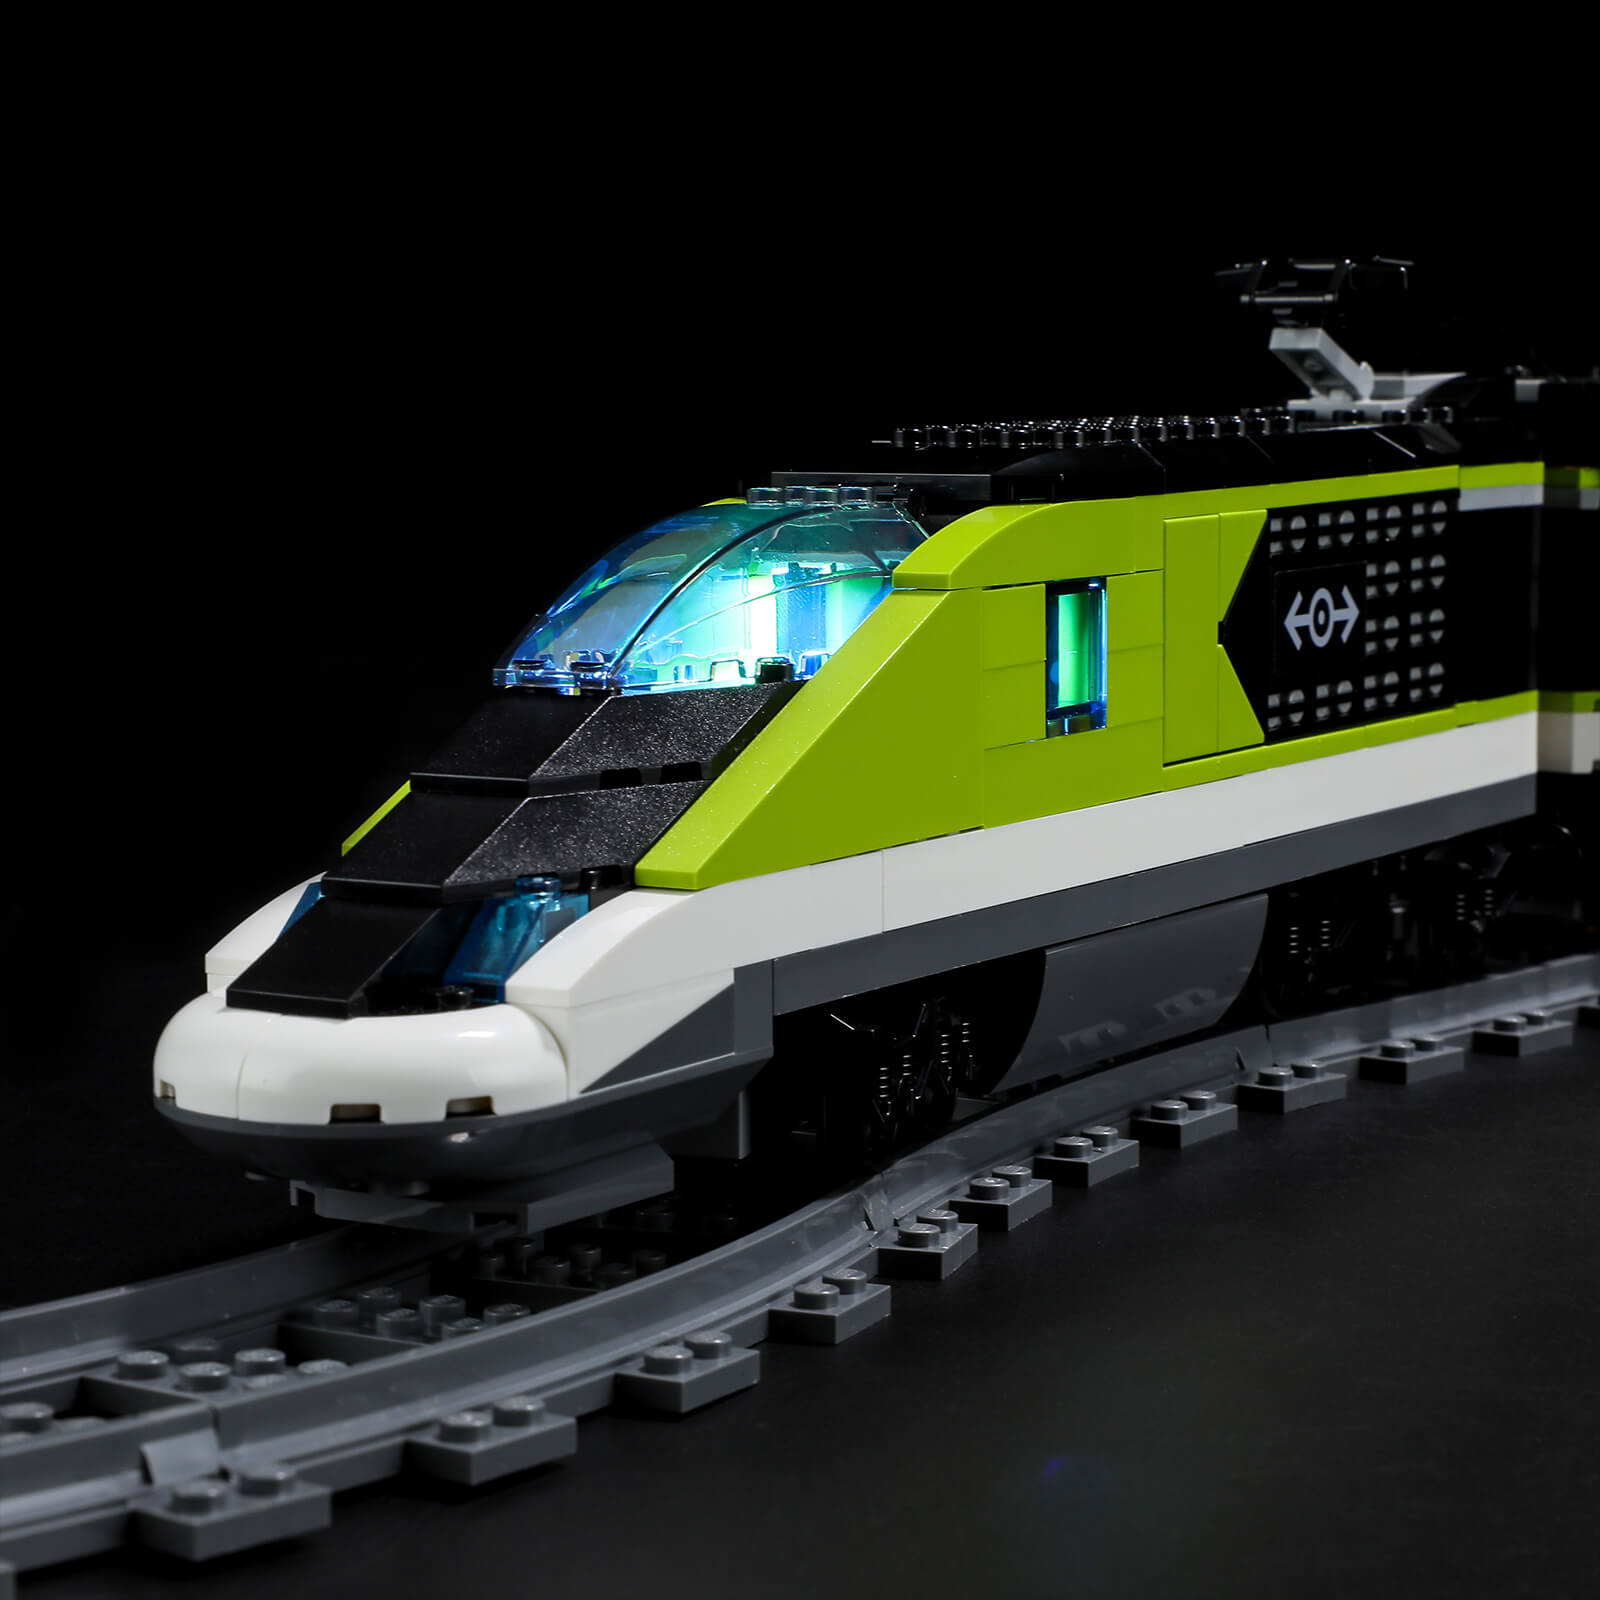 LEGO 60337 Express Passenger Train review